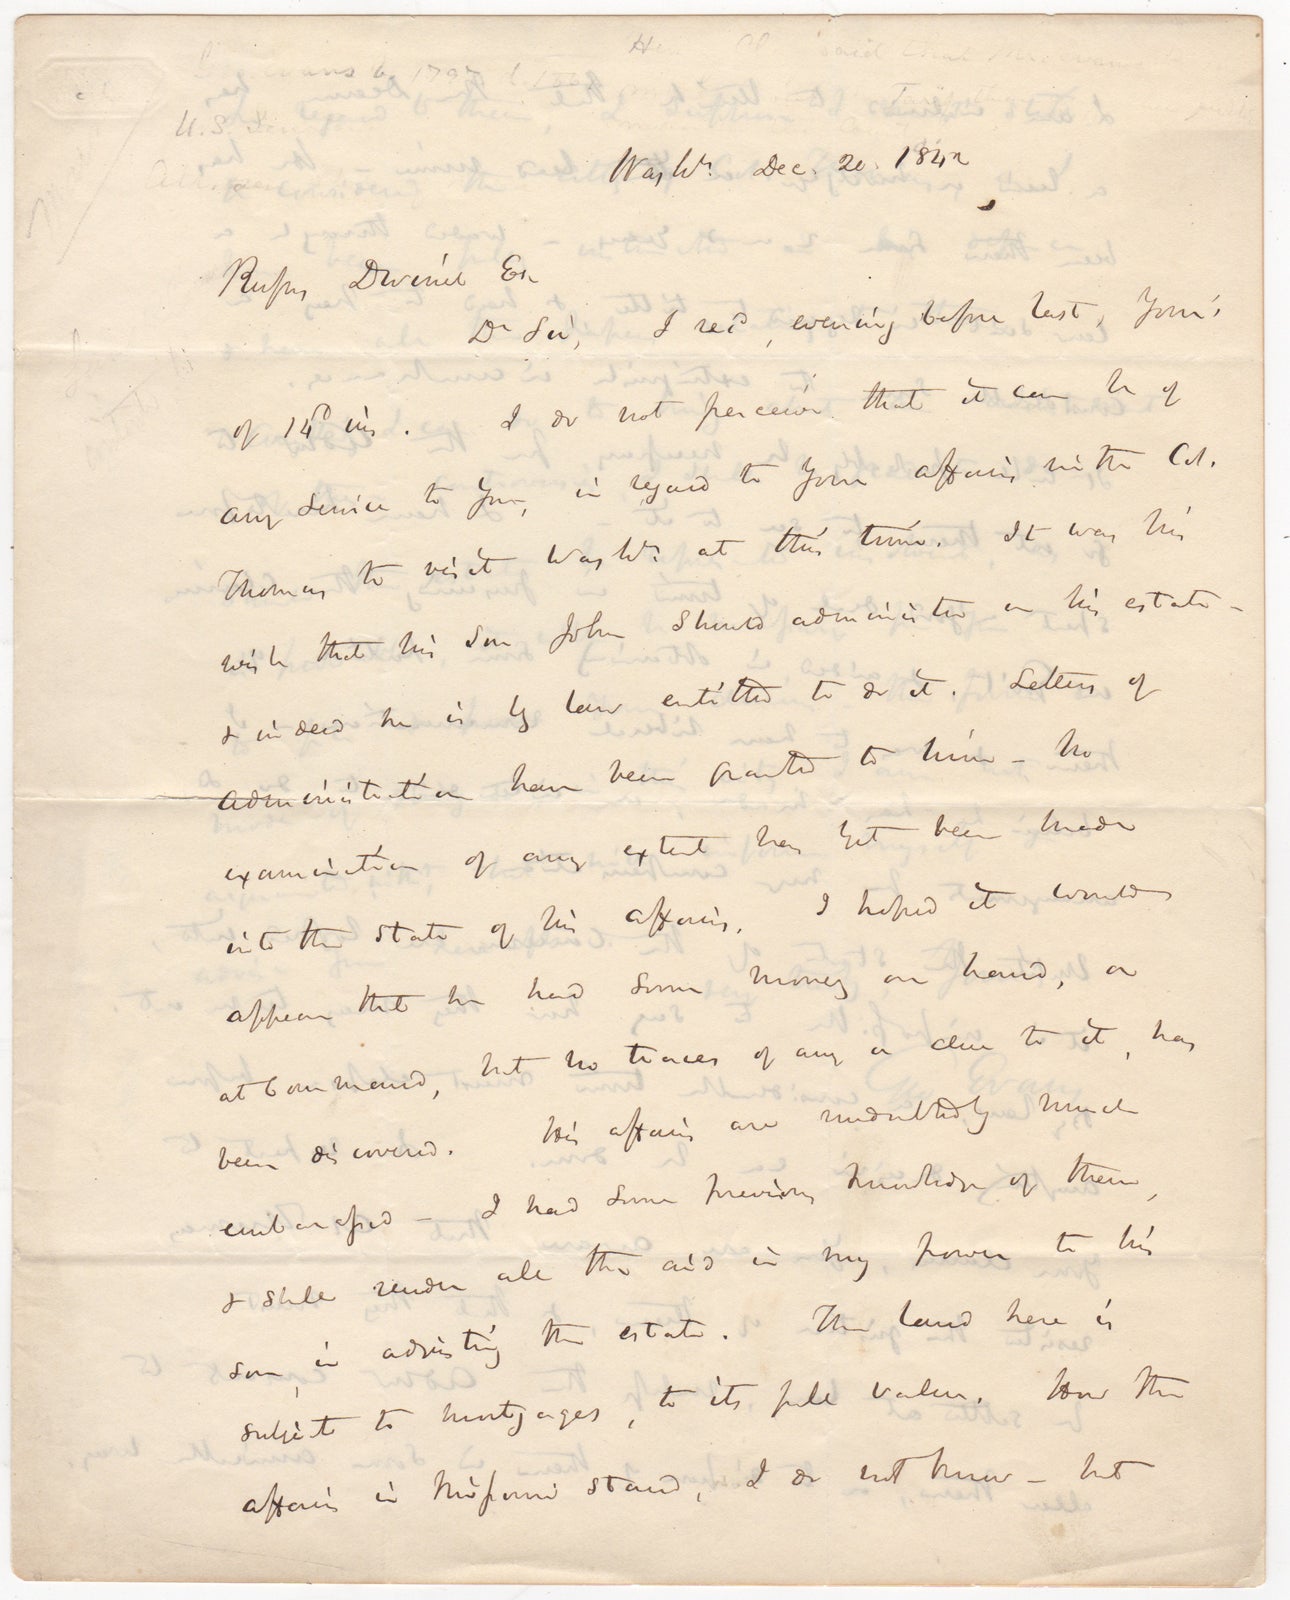 [Maine] Evans, George - [Alss] Correspondence from George Evans, U.S. Senator from Maine Concerning an Estate & an Invitation